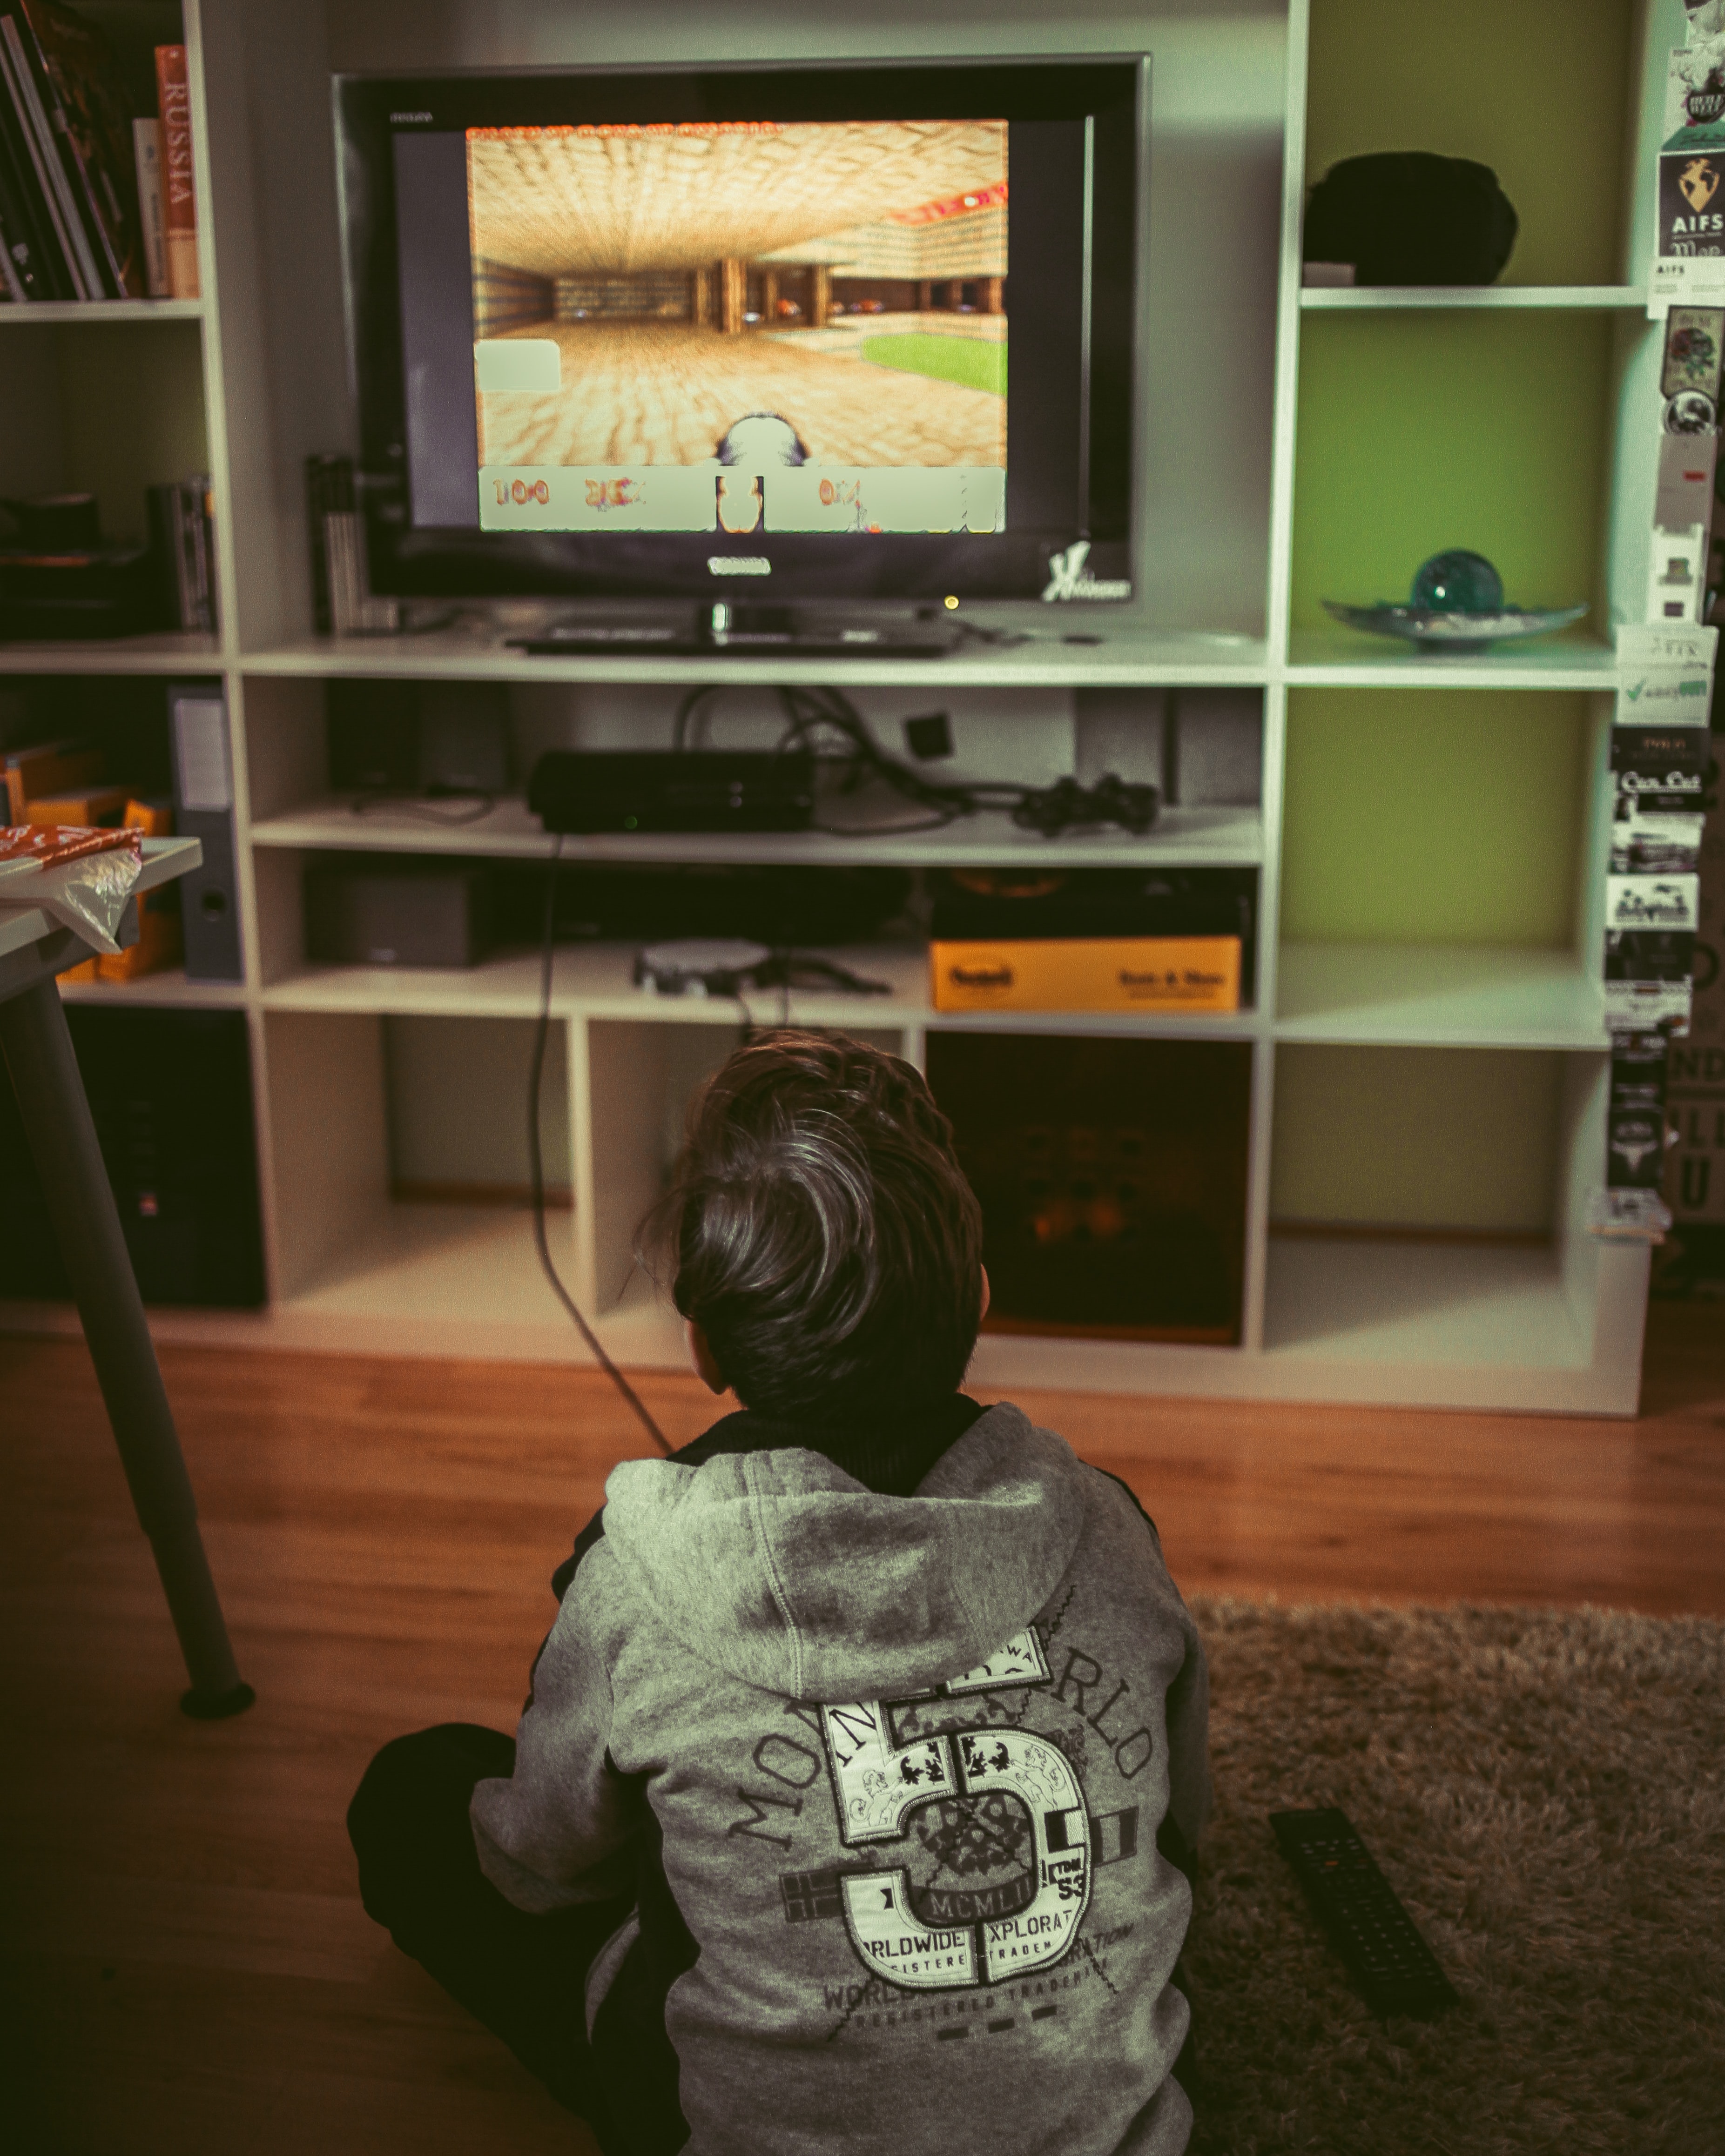 Boy sitting on floor near TV, playing video game; image by Albert Renn, via Unsplash.com.